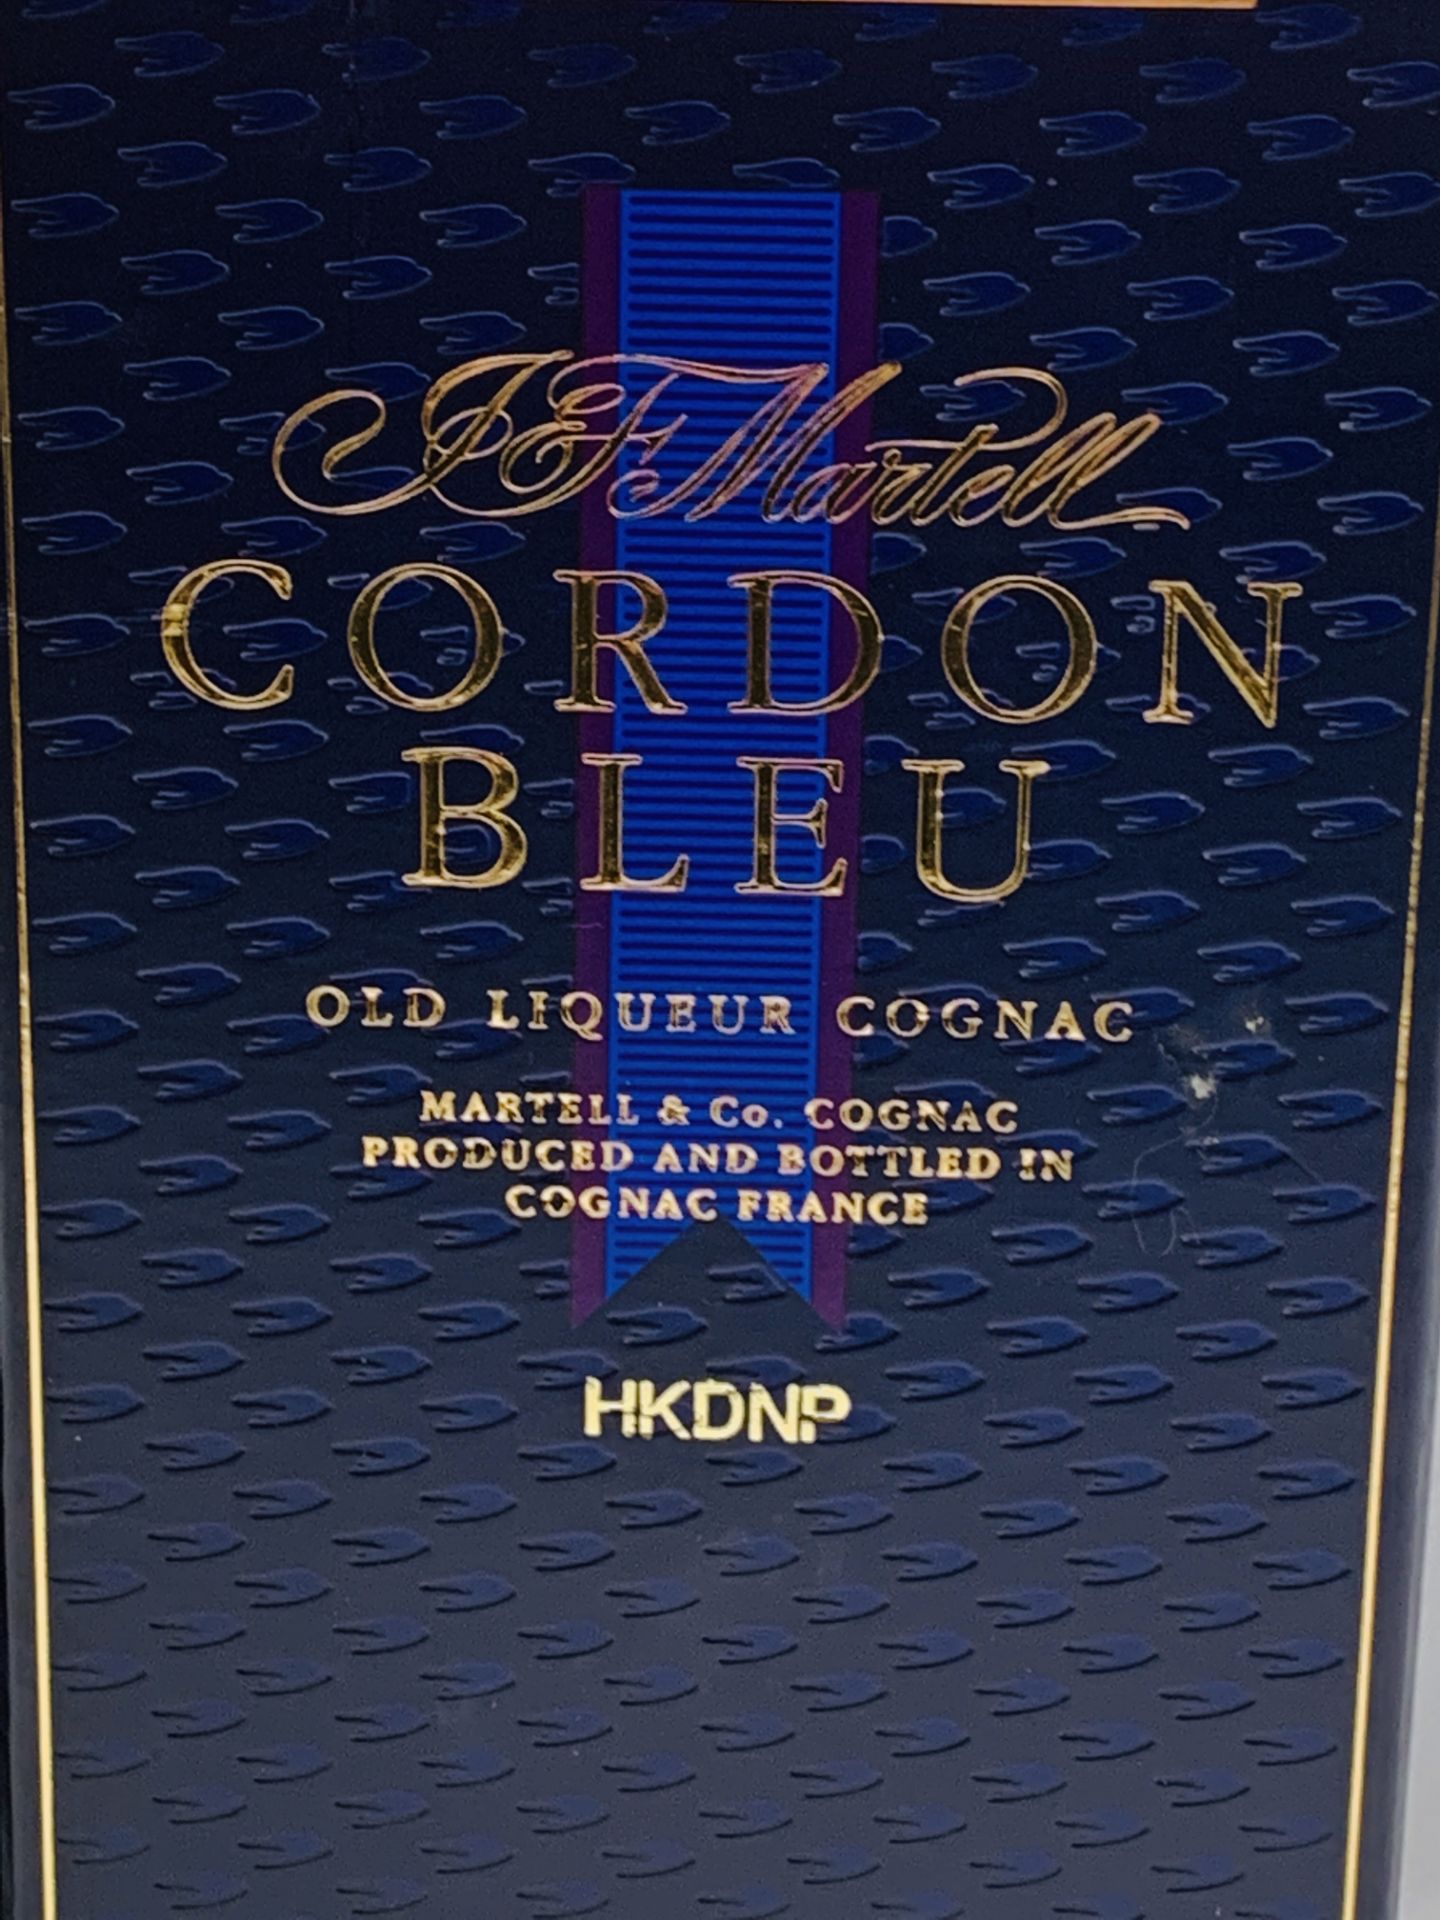 Martell Cordon Bleu cognac brandy - Image 3 of 3